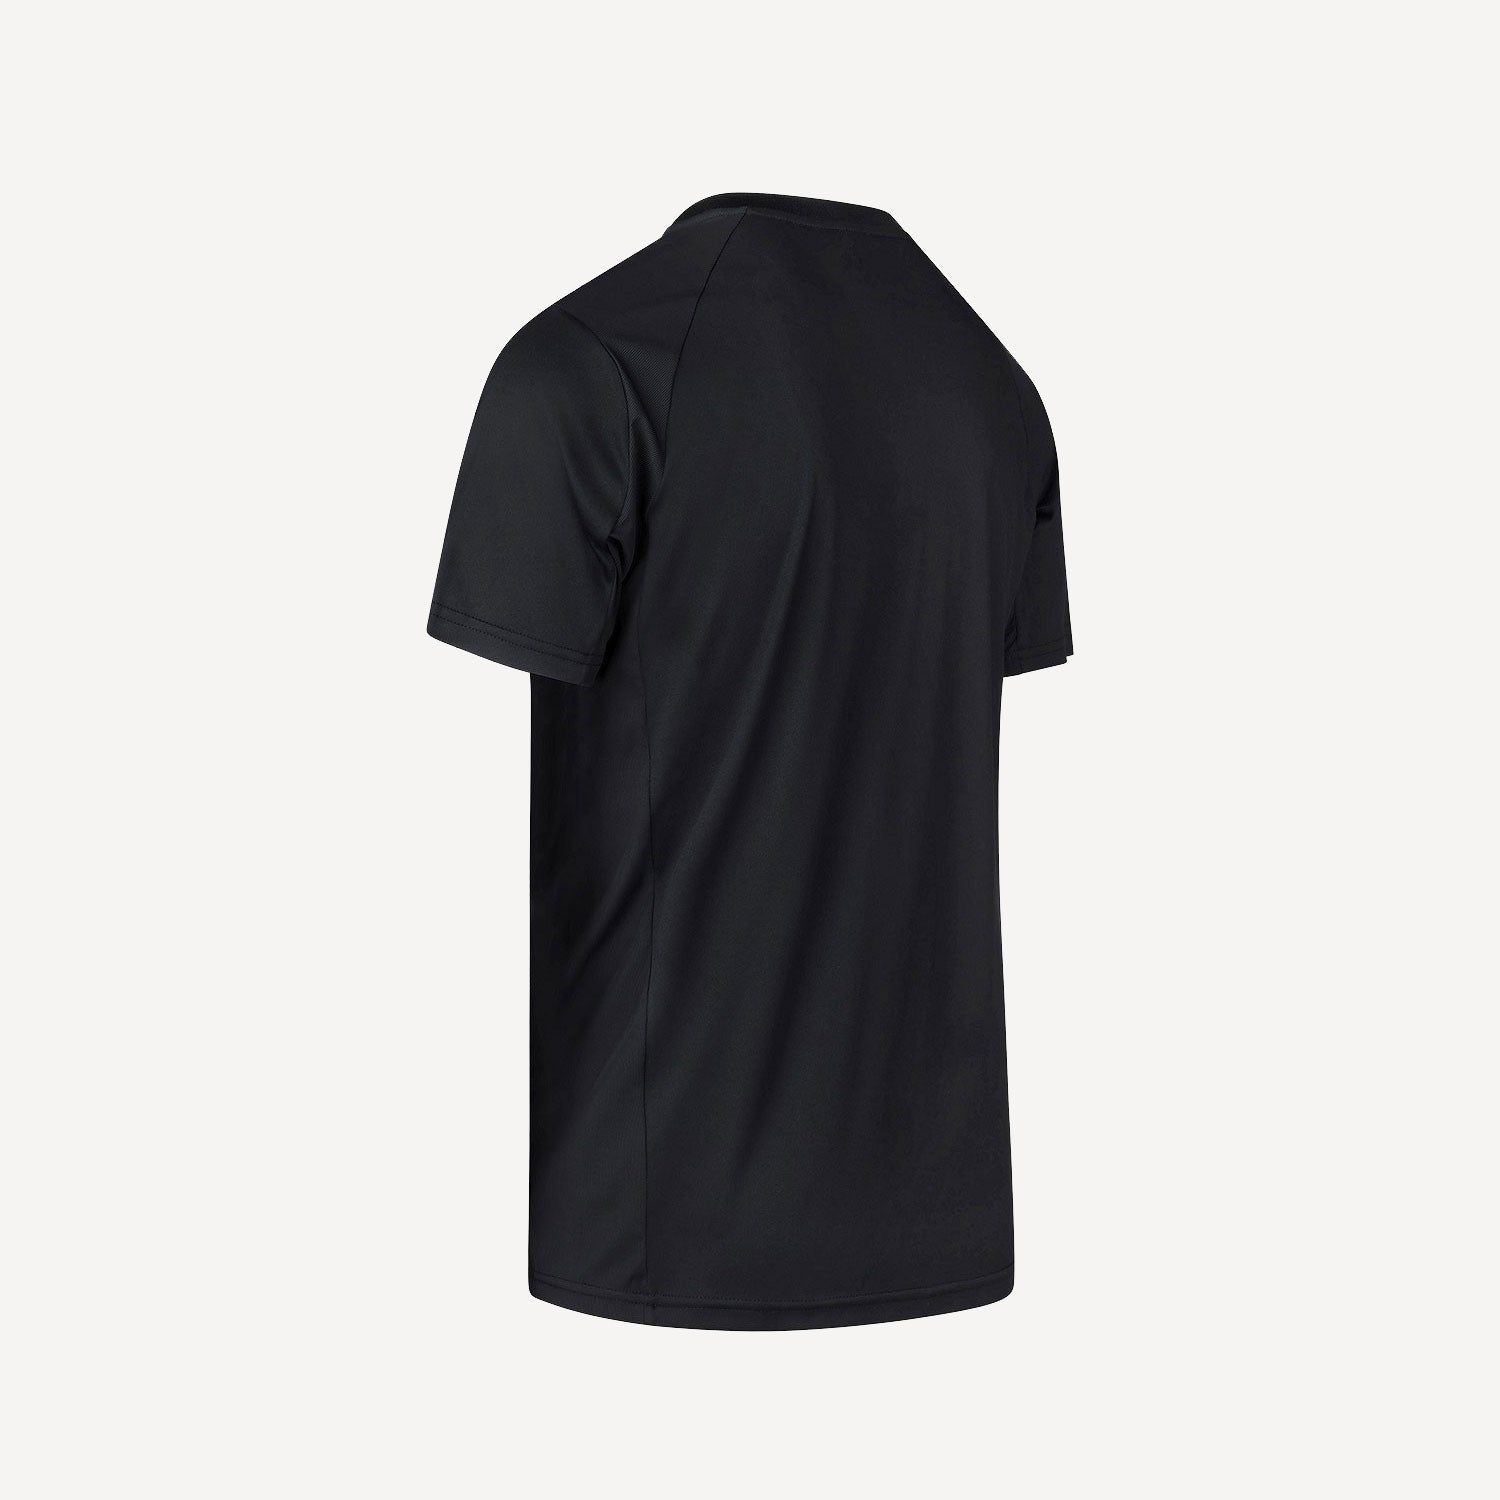 Robey Ace Men's Tennis Shirt - Black (2)